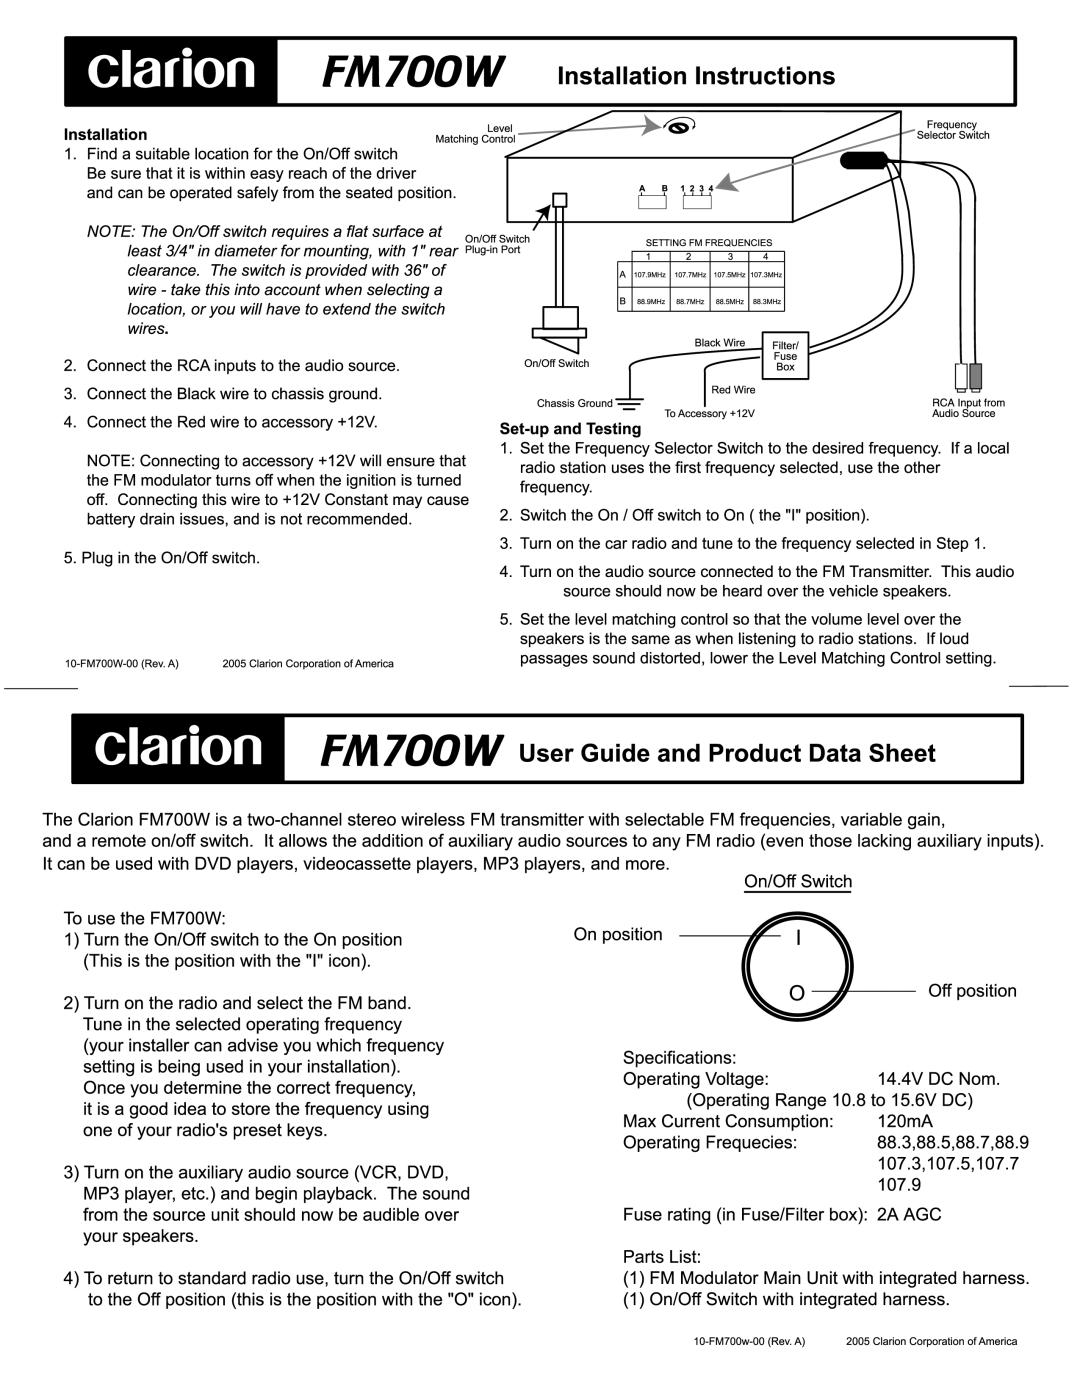 Clarion FM700W manual 